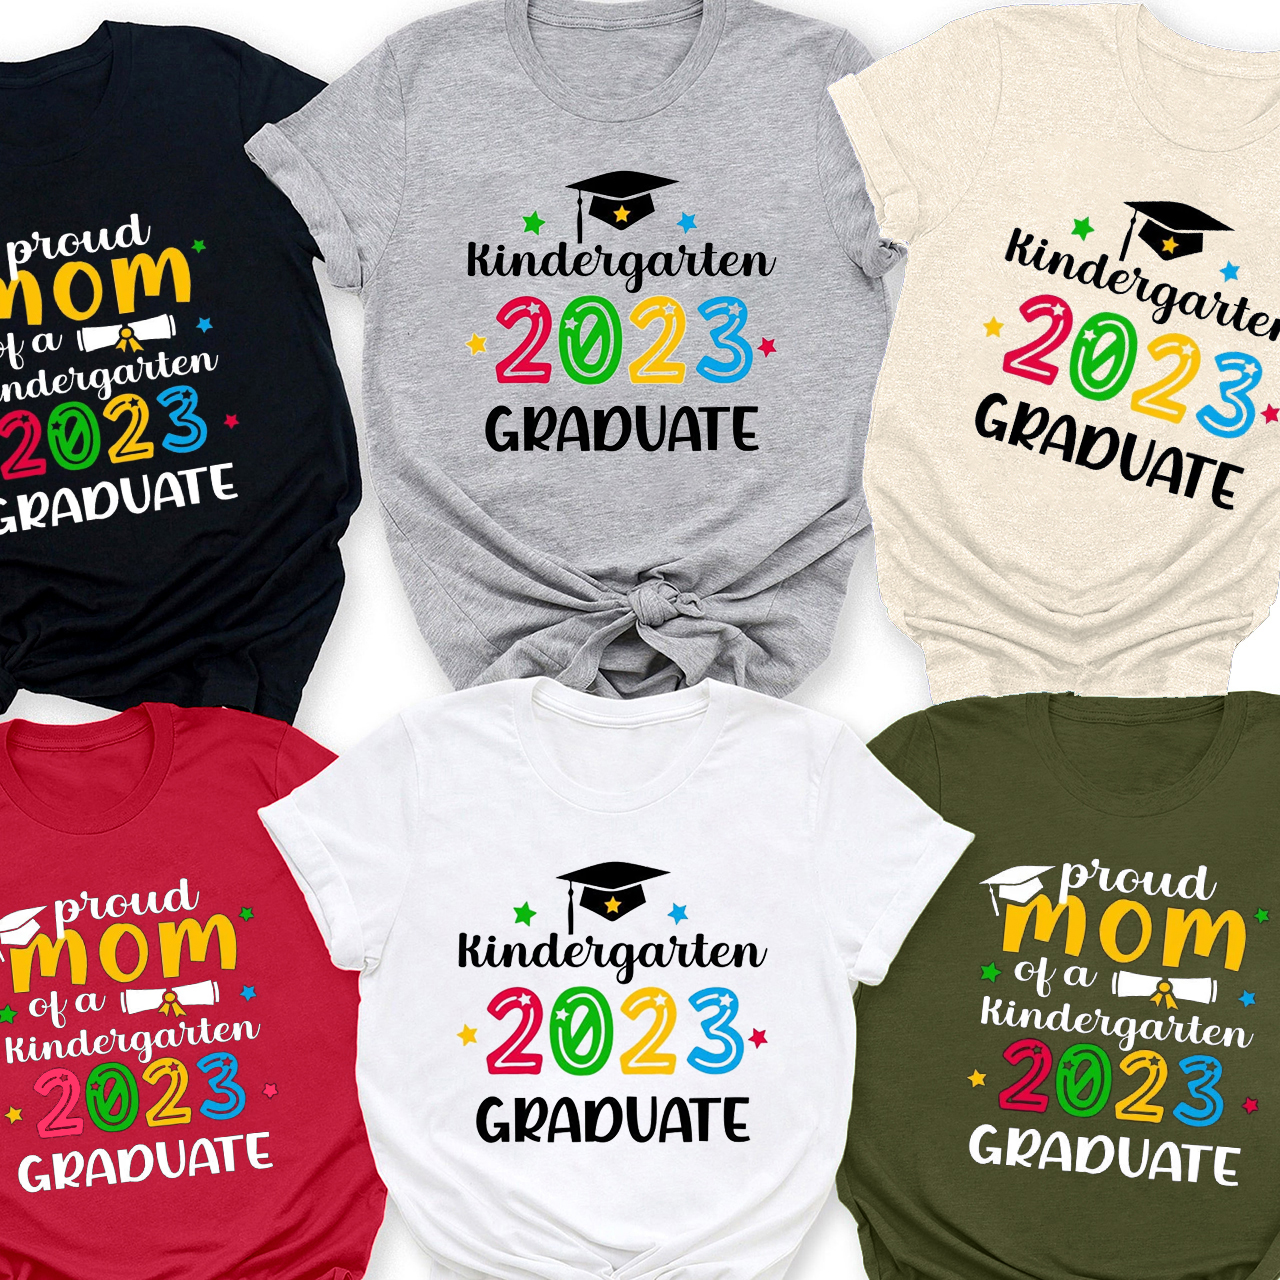 Personalized Kindergarten 2023 Graduate T-Shirt